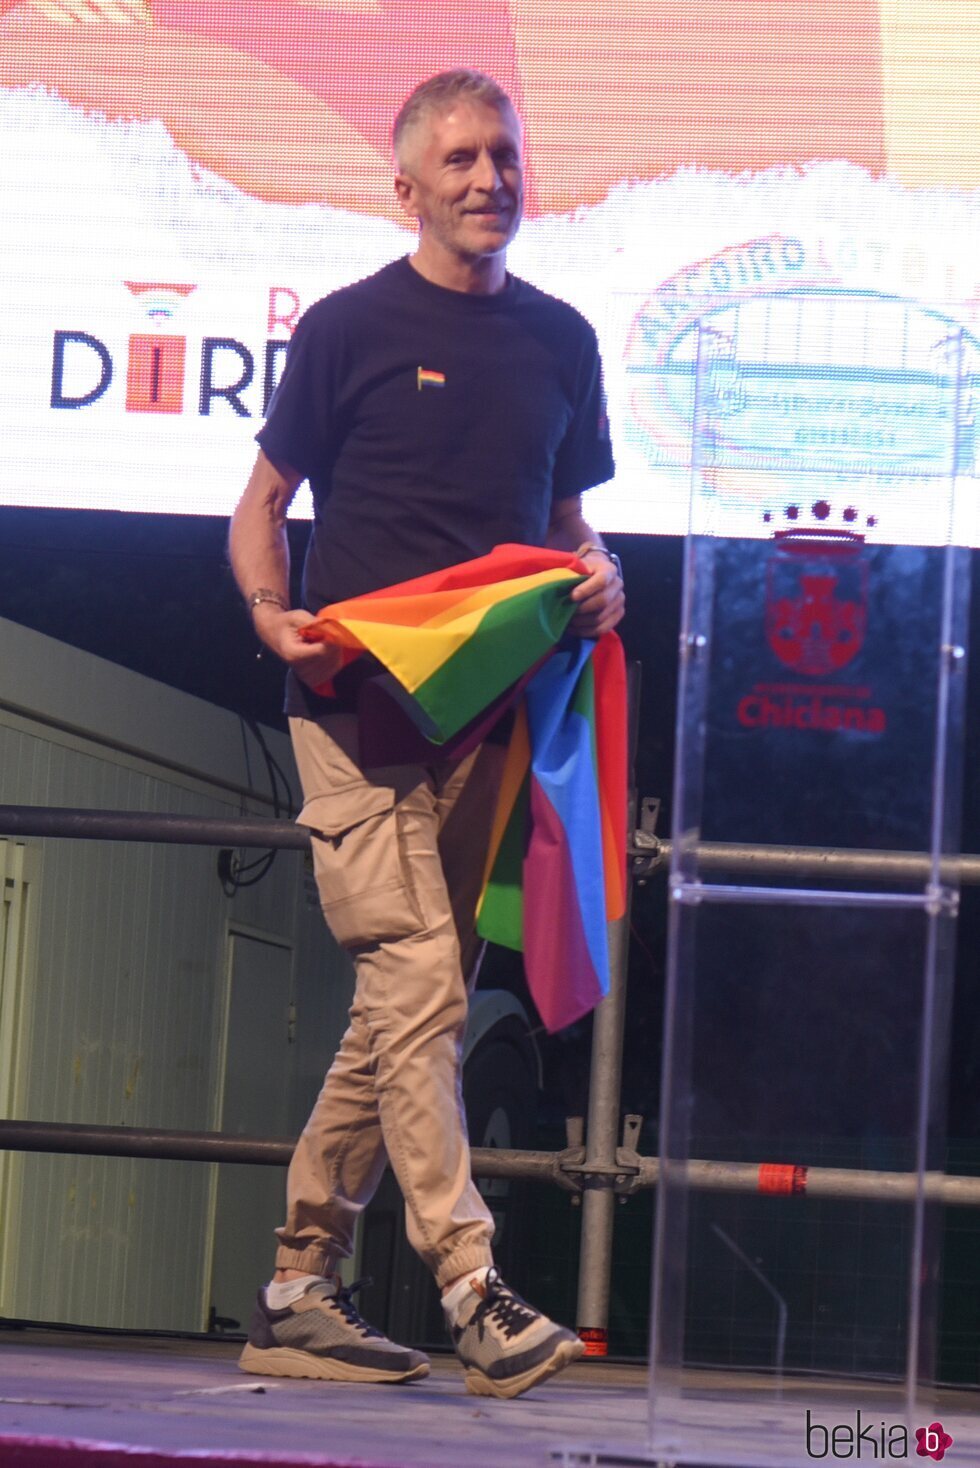 Fernando Grande-Marlaska con una bandera LGTBI en el Orgullo LGTBIQ+ de Chiclana de la Frontera